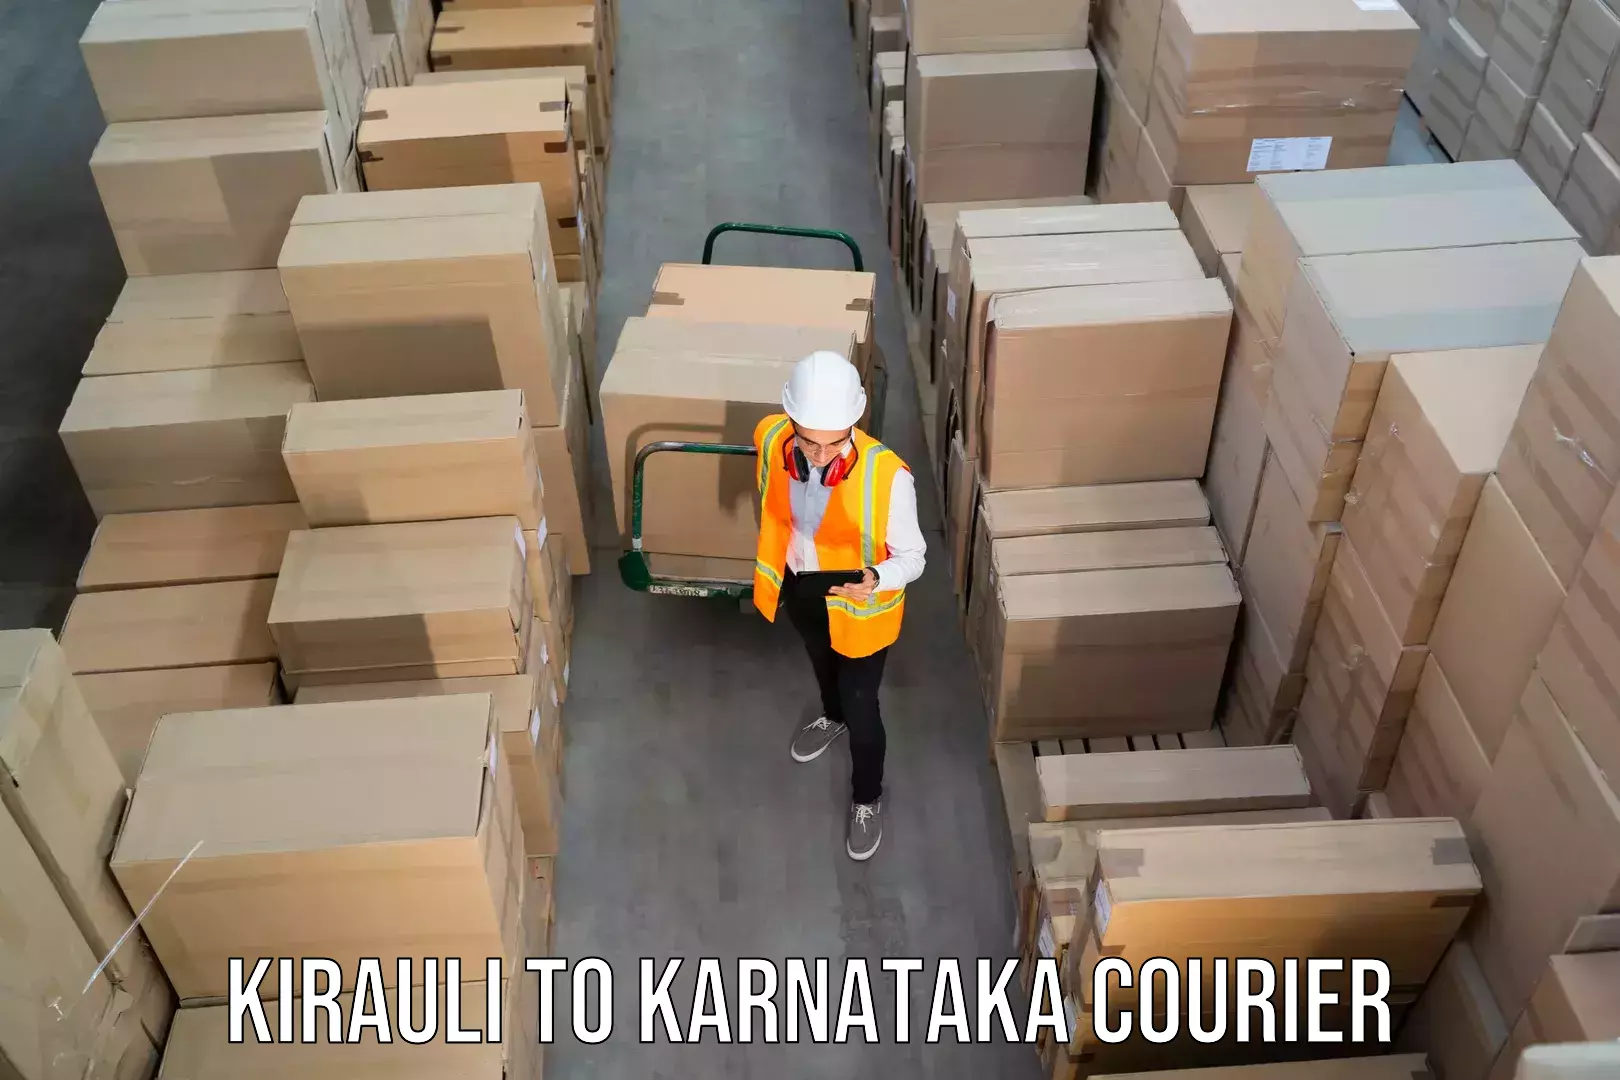 Comprehensive shipping network Kirauli to Karnataka